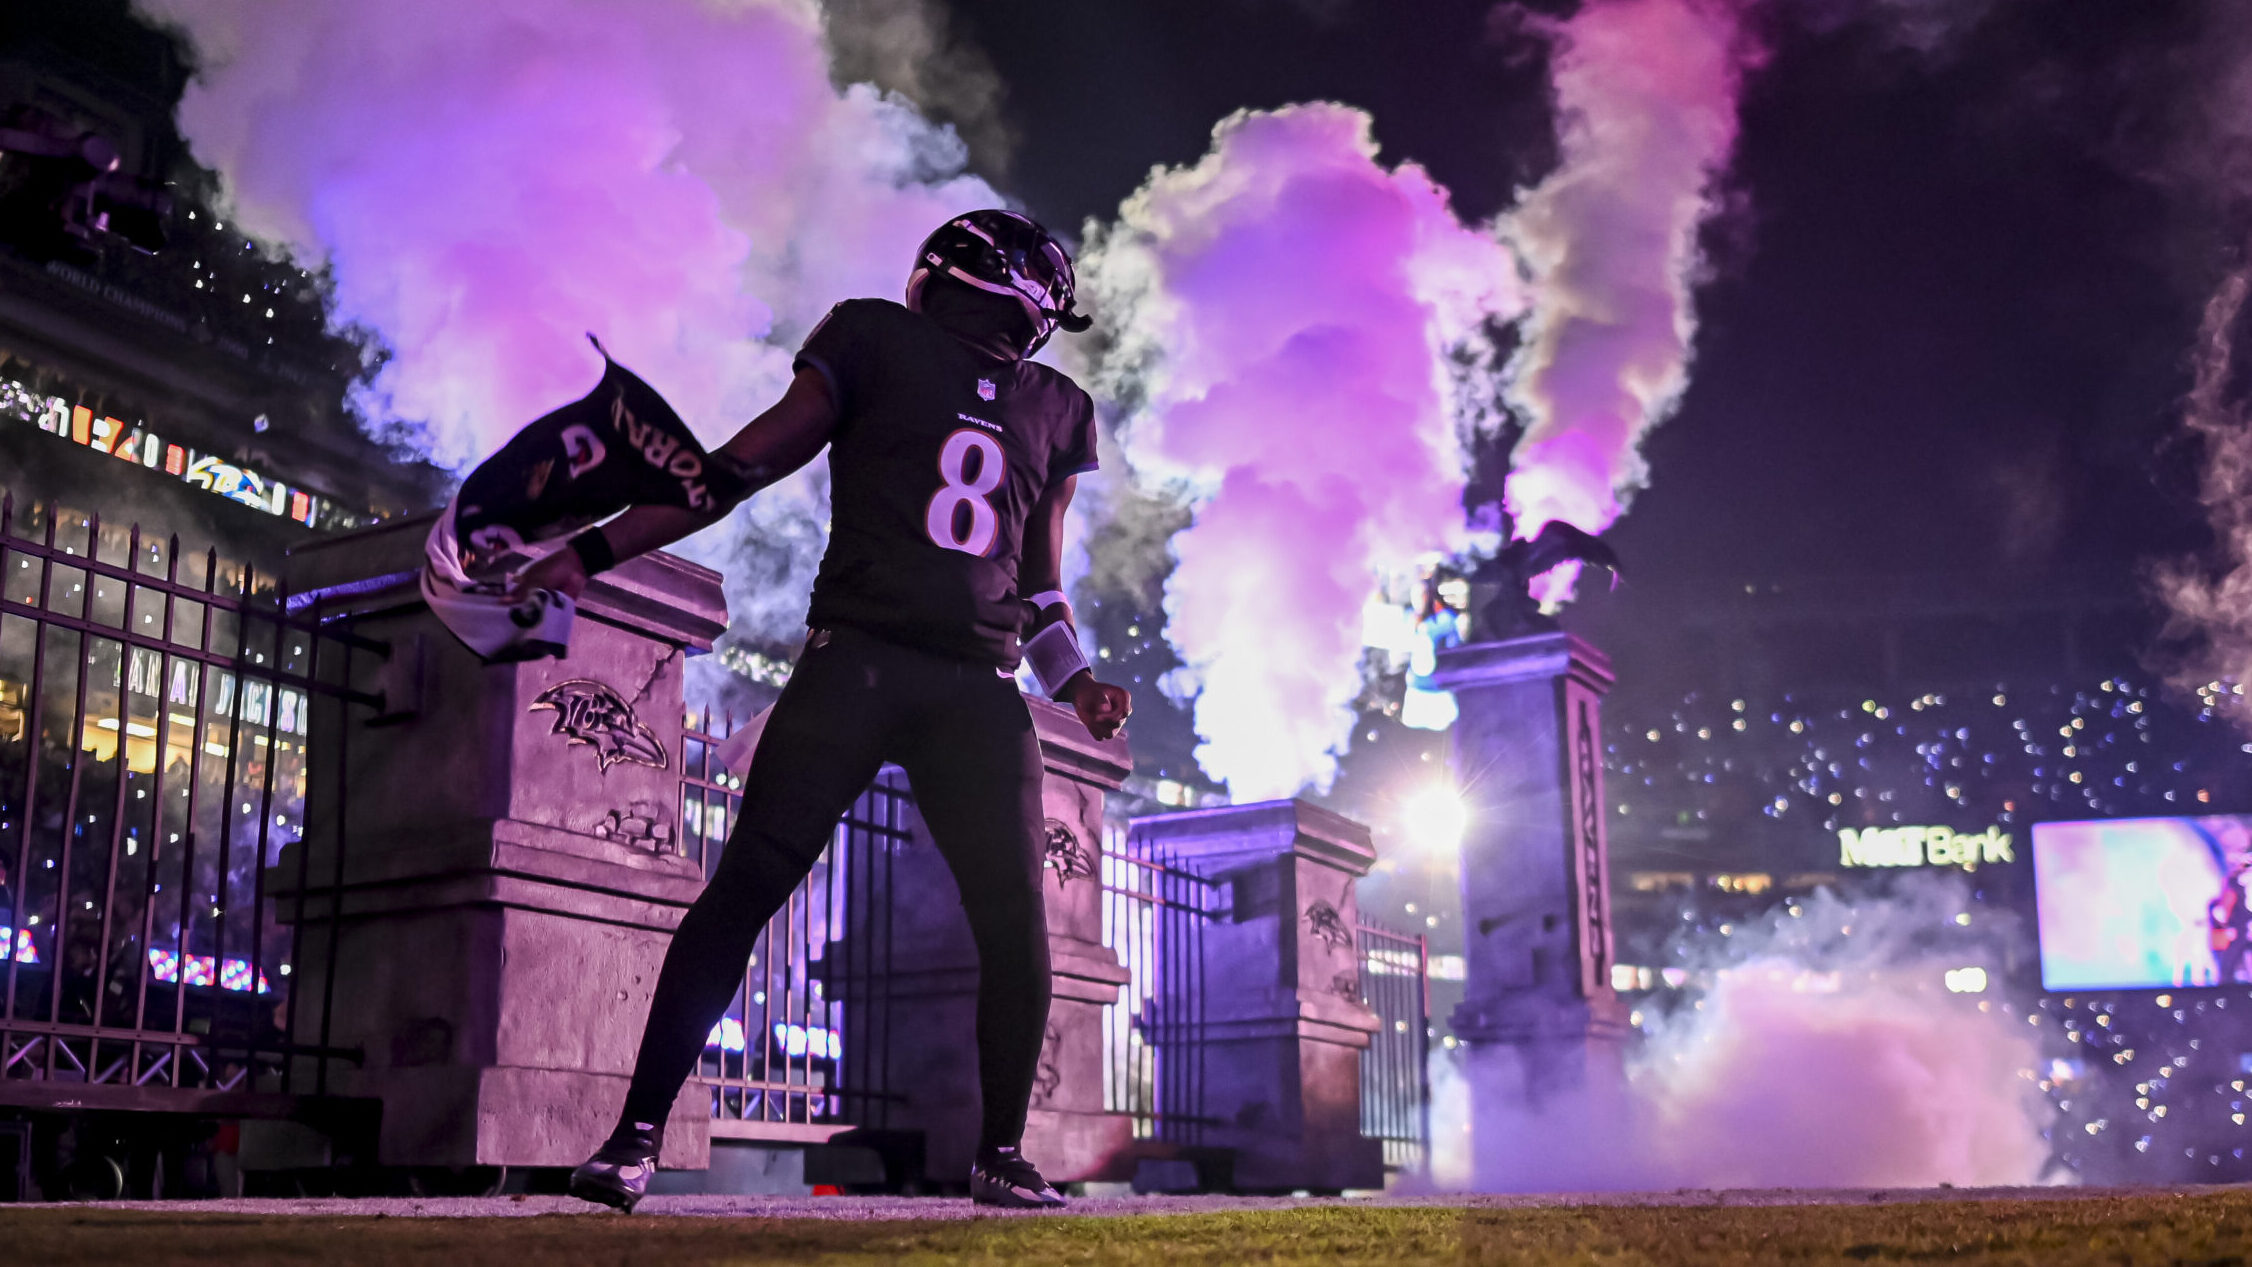 Lamar Jackson runs onto the field with purple lights flashing